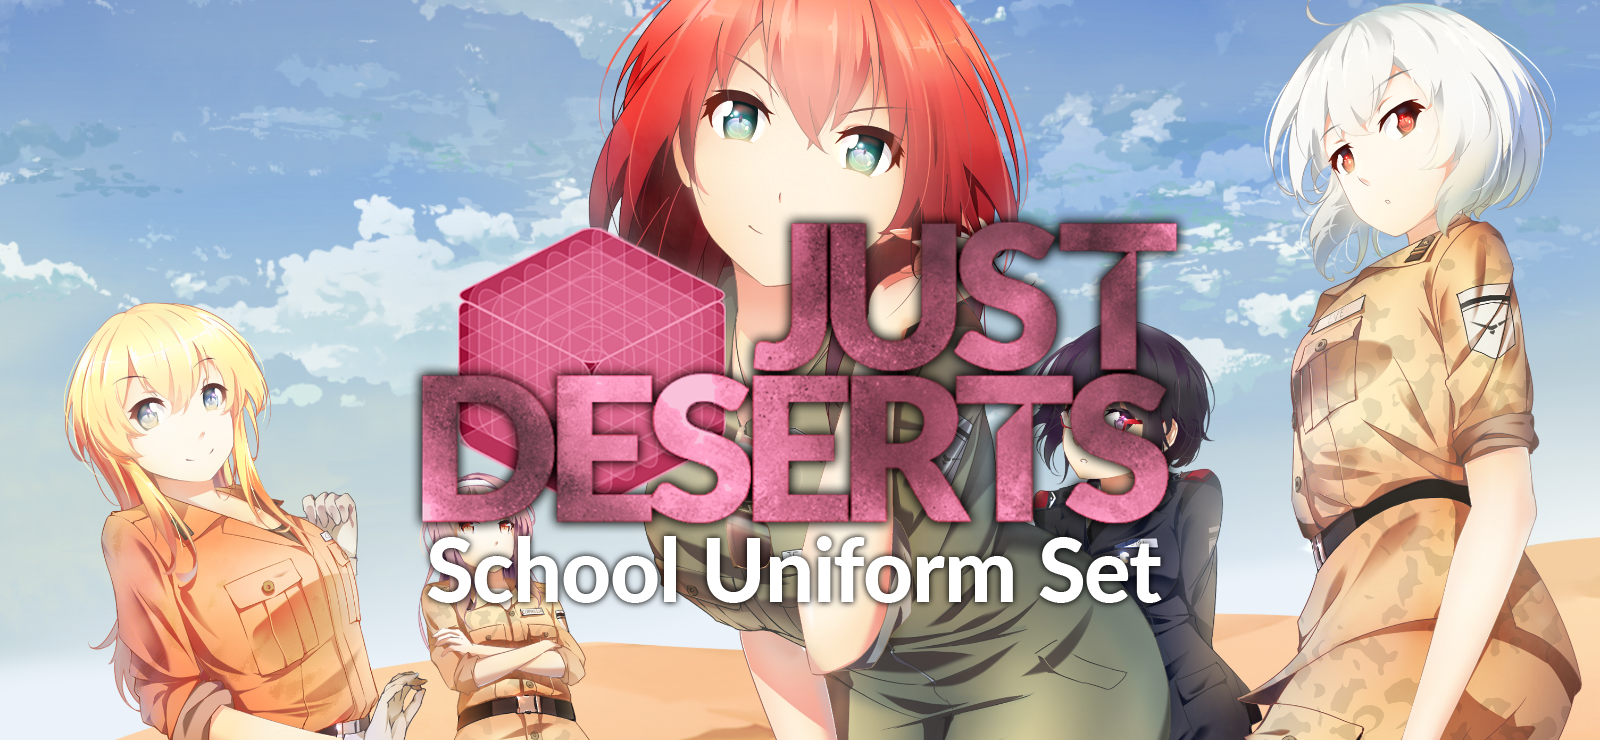 Just Deserts: School Uniform Set